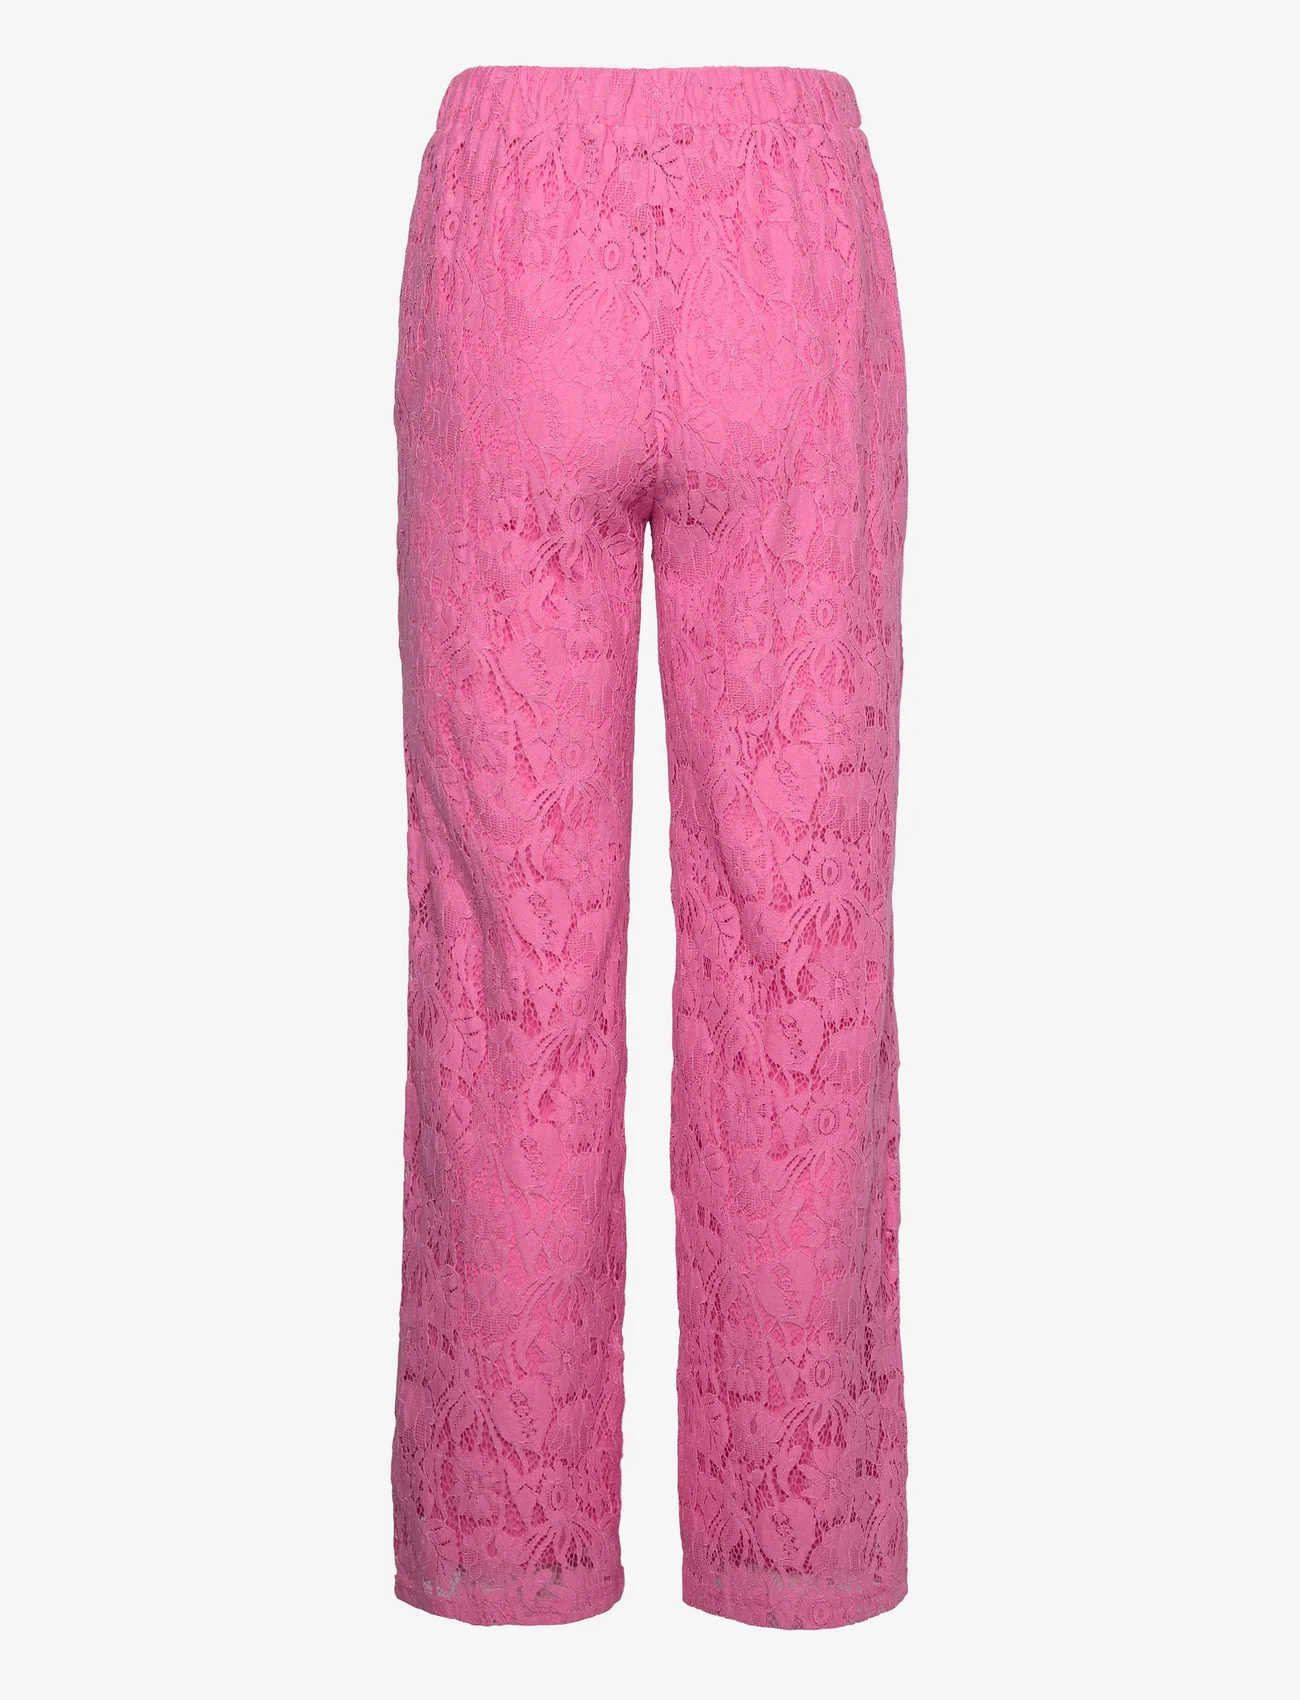 Noella - Macenna Pants - straight leg trousers - candy pink - 1